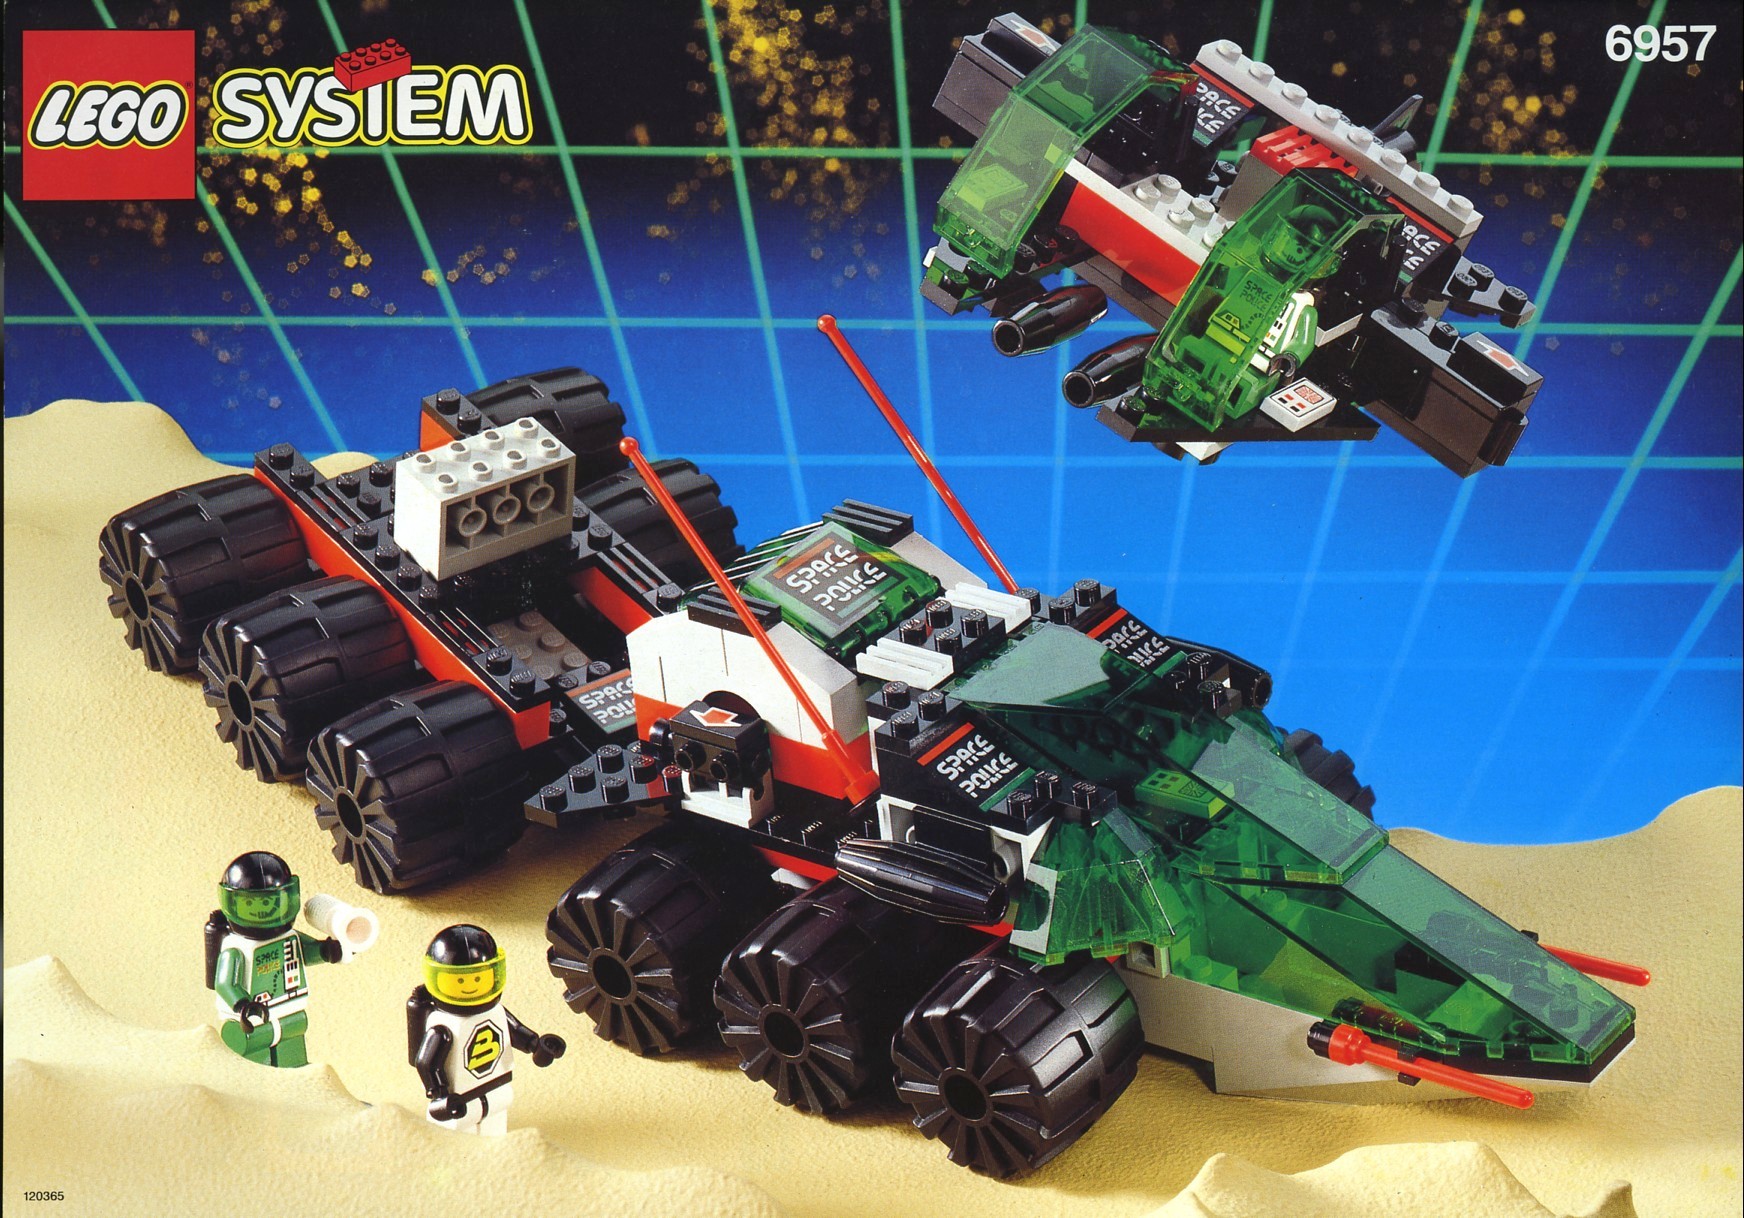 LEGO Sp037 Space Police 2 LEGOLAND 6781 6984 6897 Space SYSTEM Minifigure 